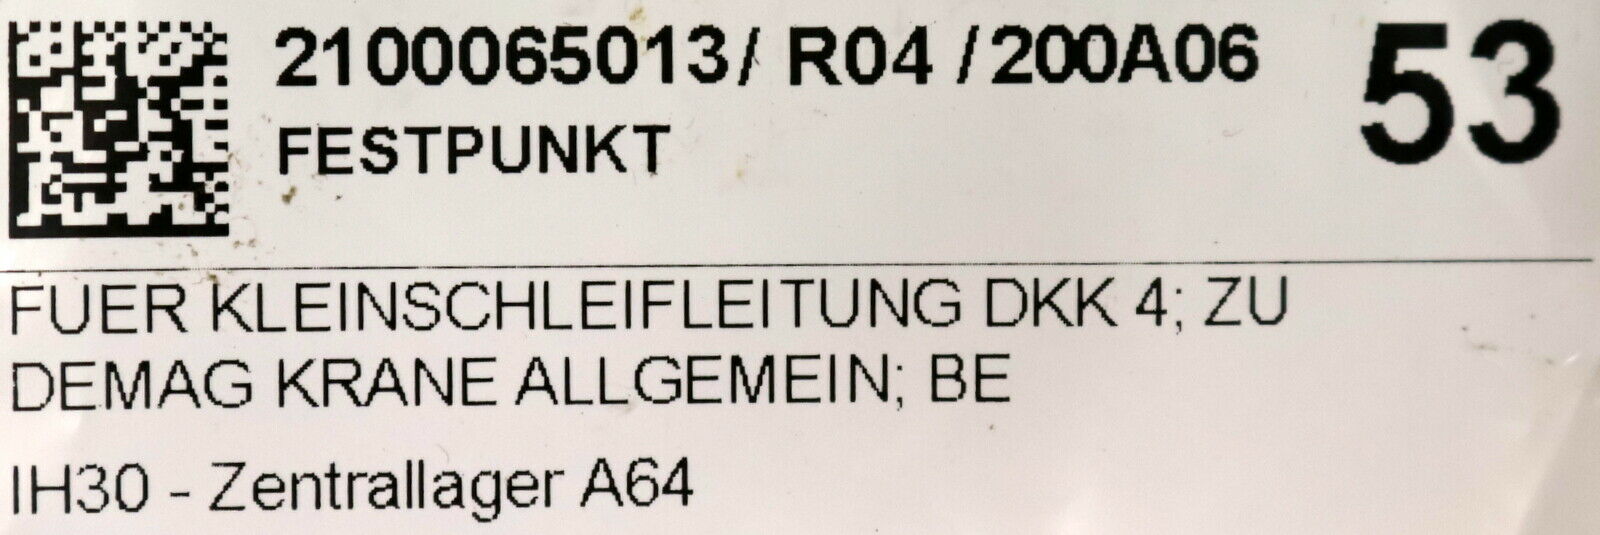 DEMAG Festpunkt DKK Stop complete Art.Nr. 979 146 44 f. Kleinschleifleitung DKK4